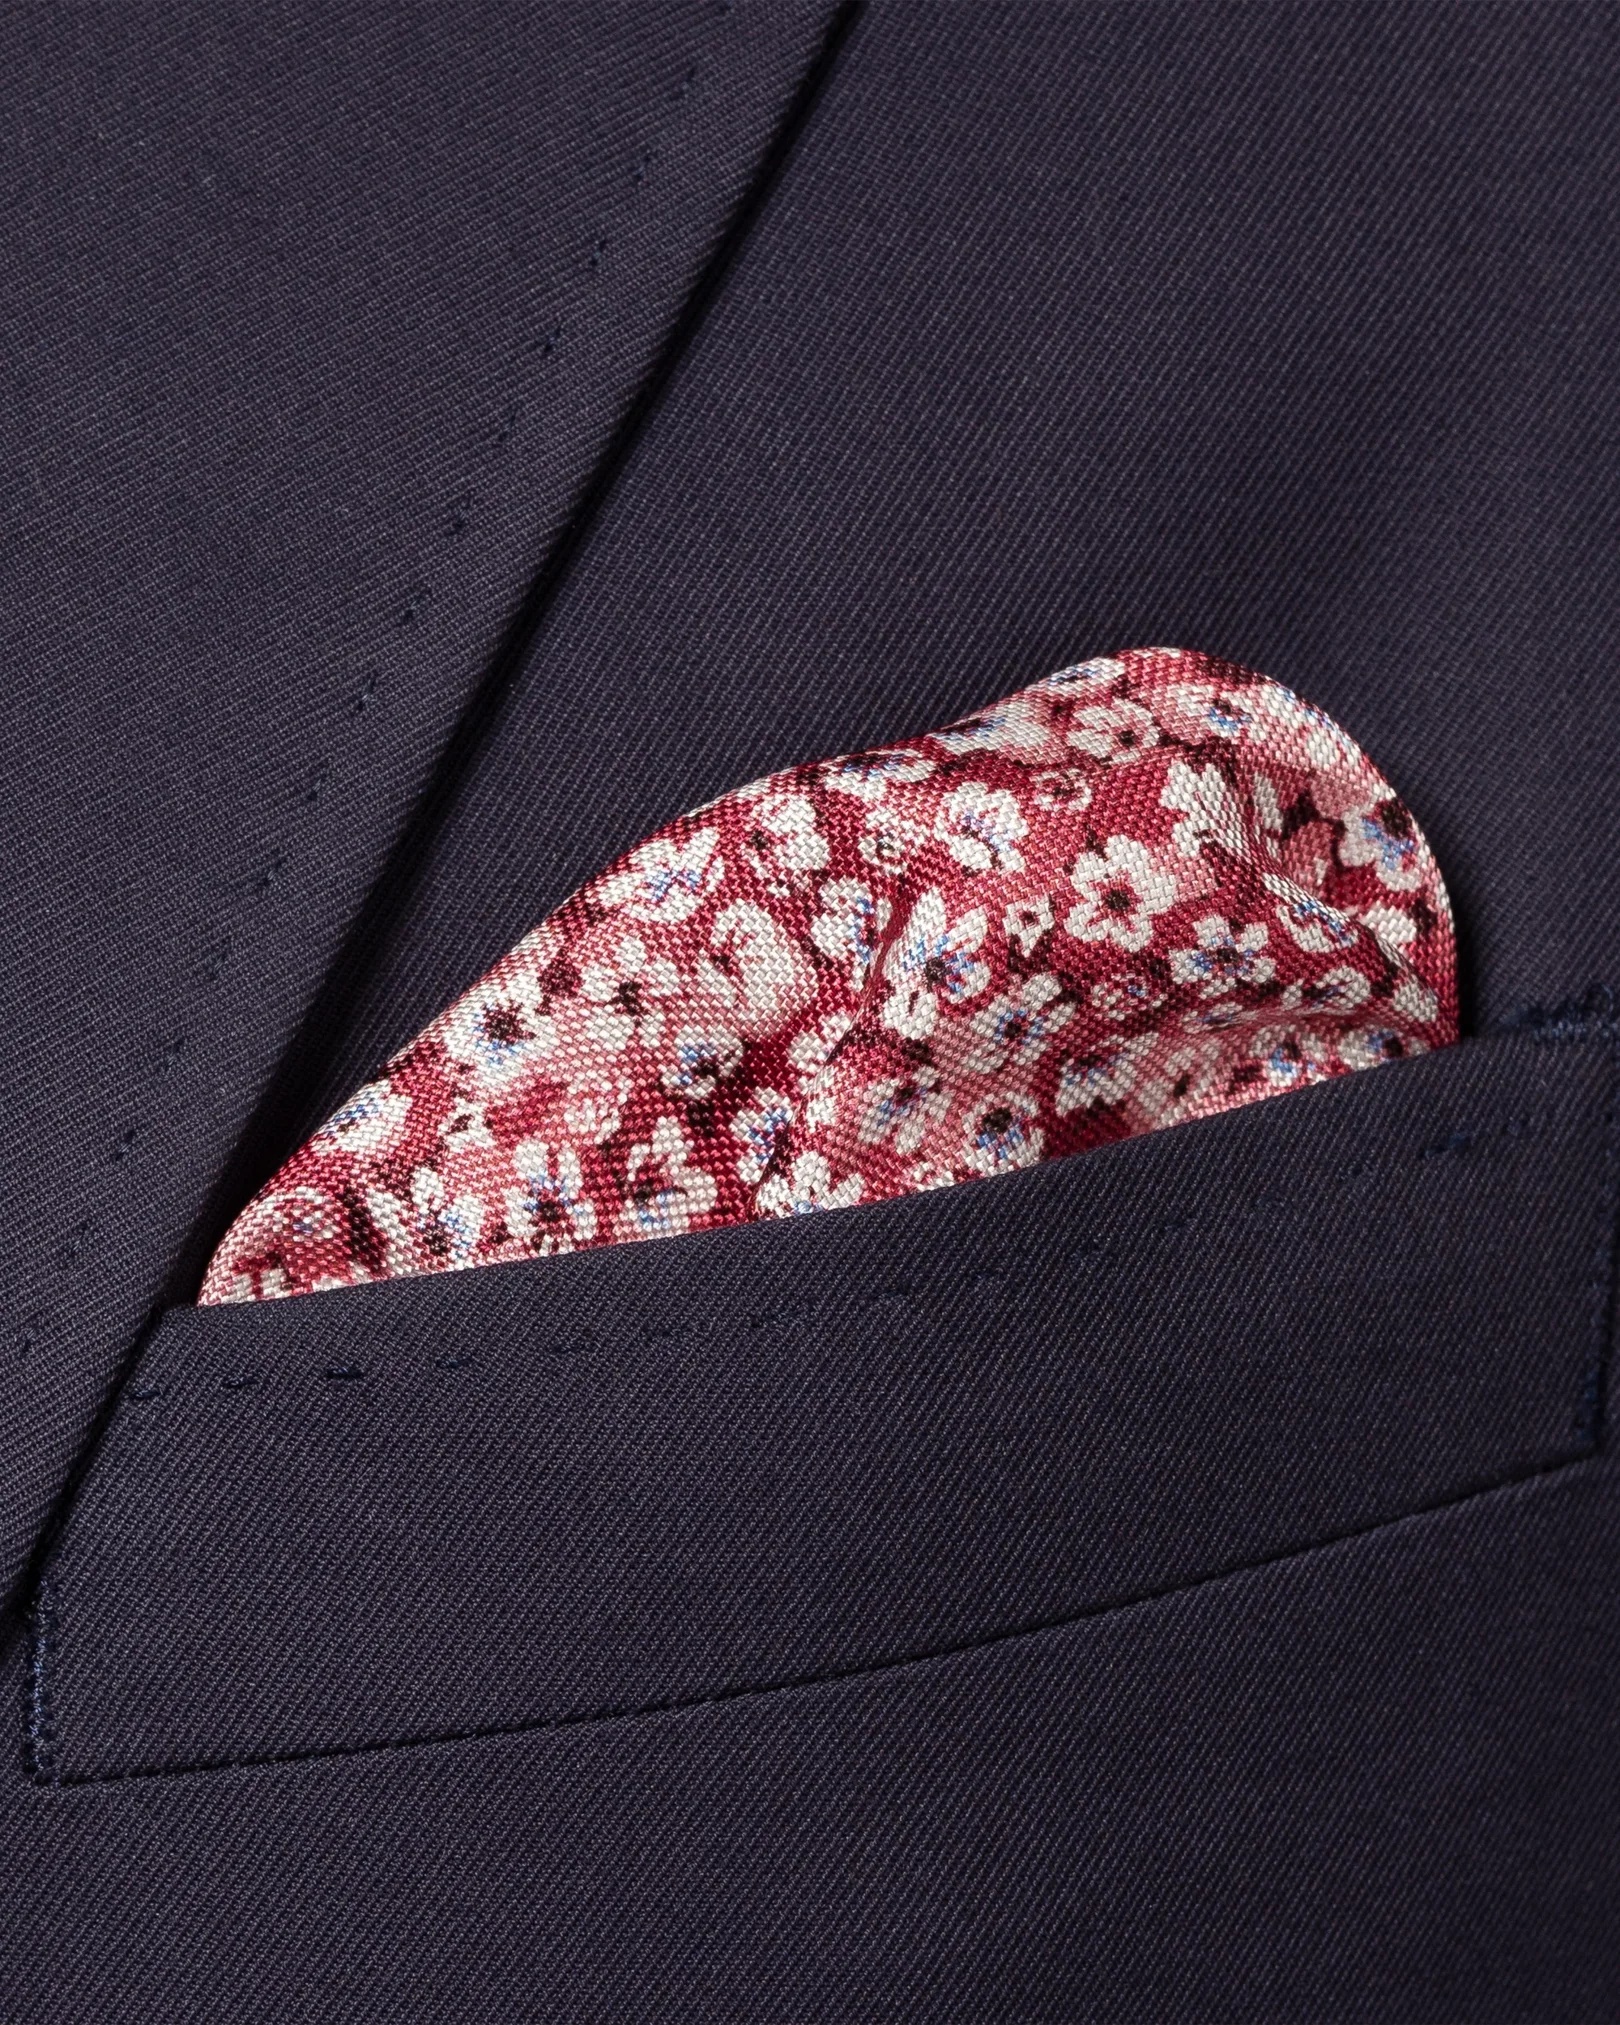 Eton - red floral print silk pocket square